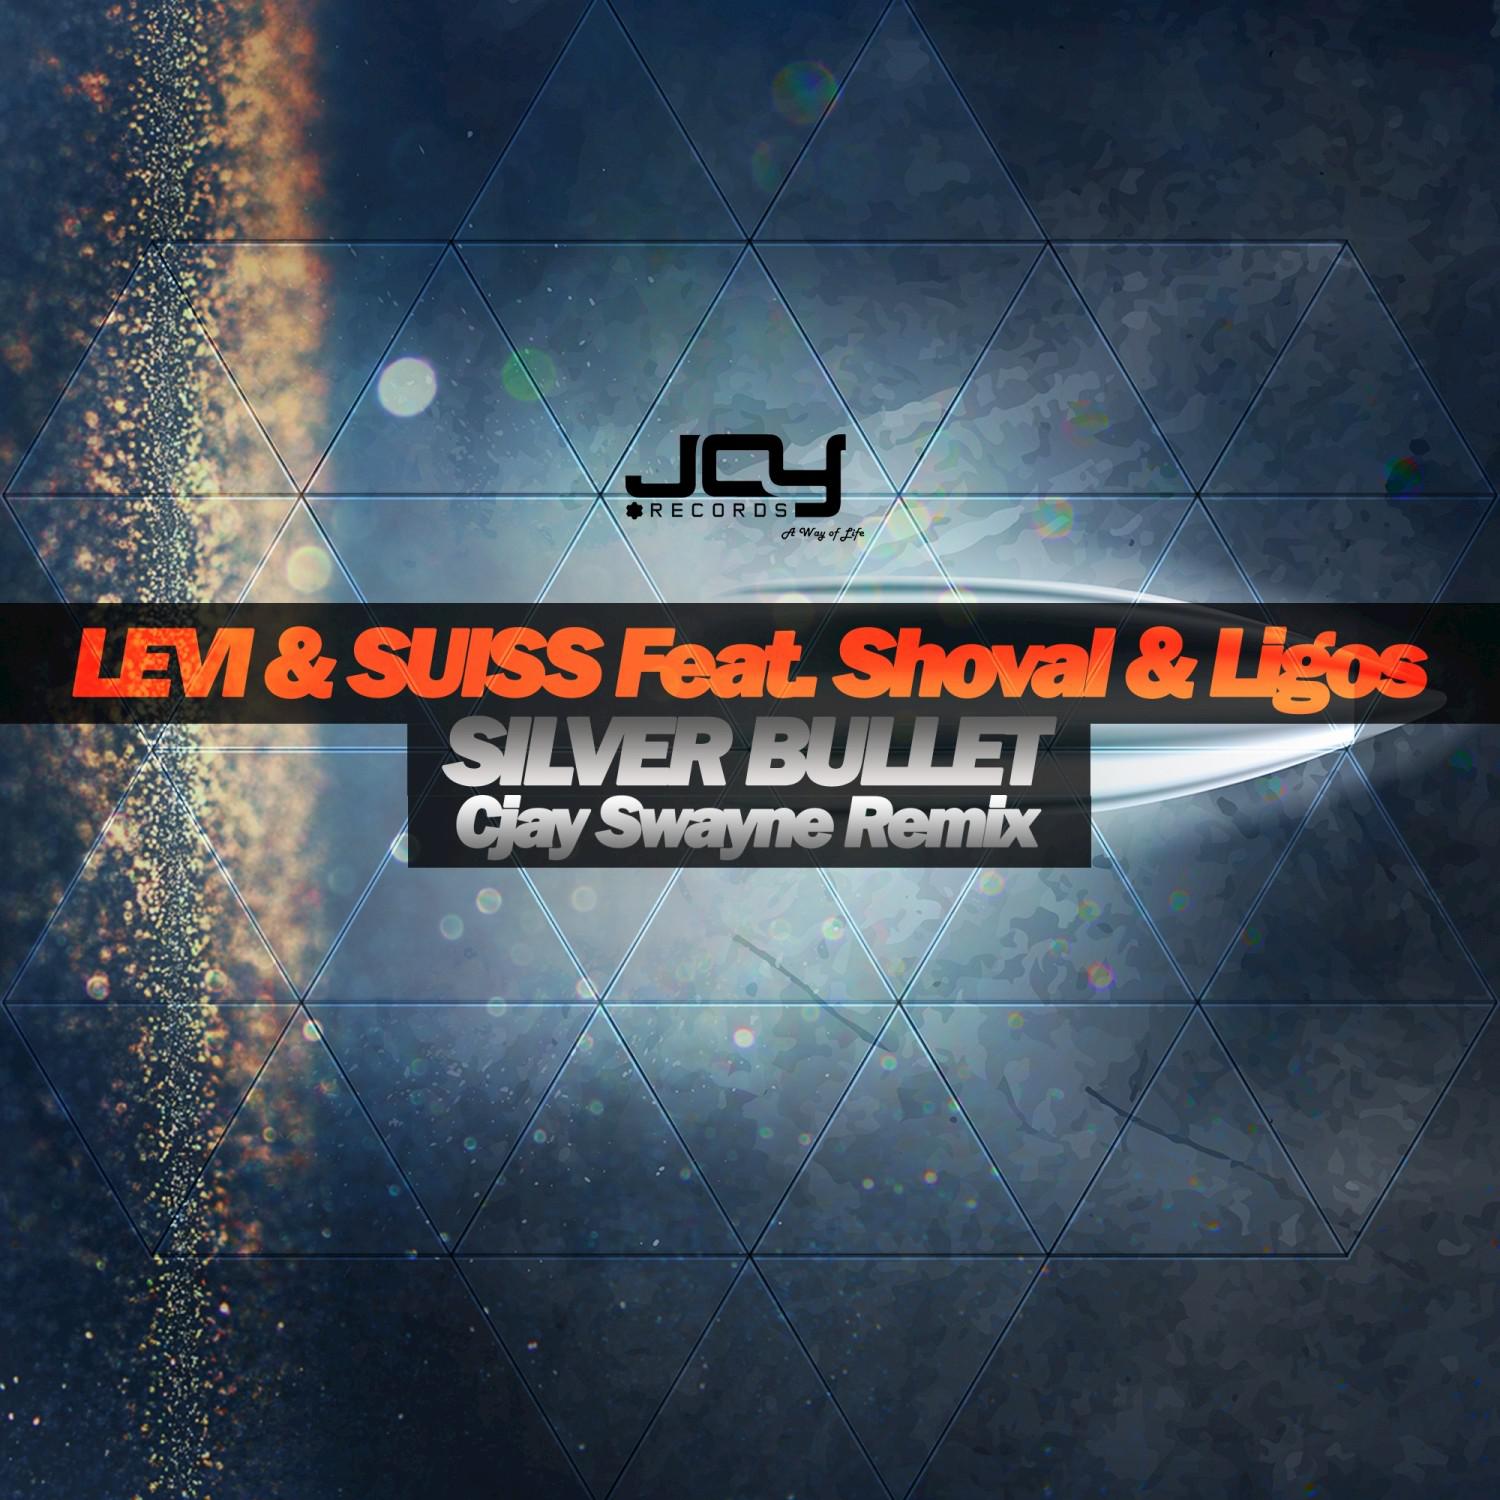 Silver Bullet (CJay Swayne Remix)